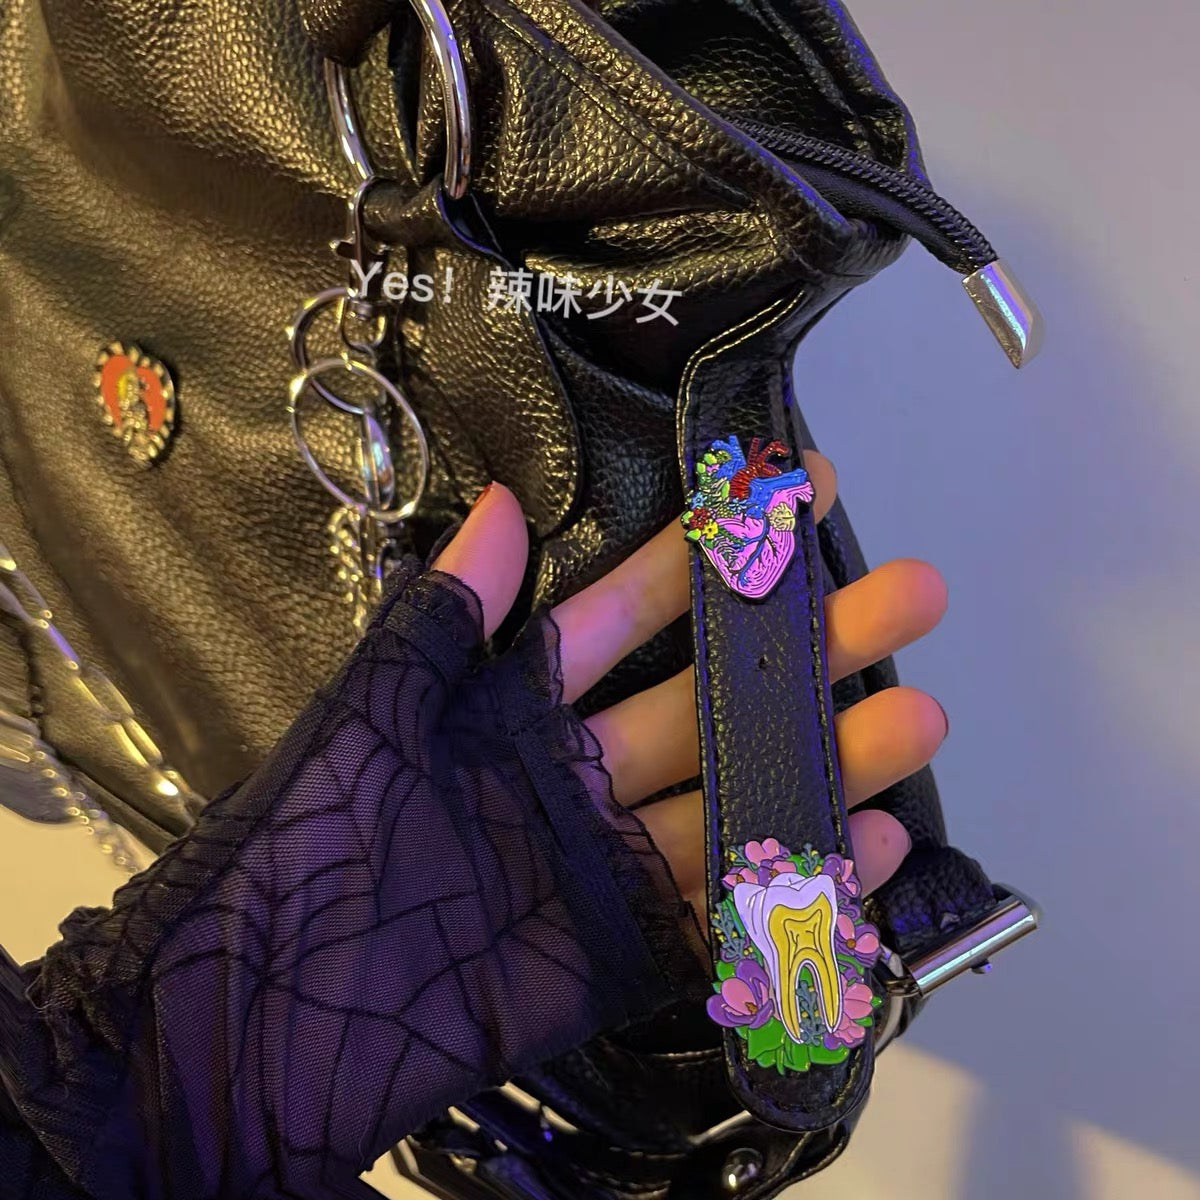 Subculture Gothic Lolita Shoulder Bag/Cross-body Bag